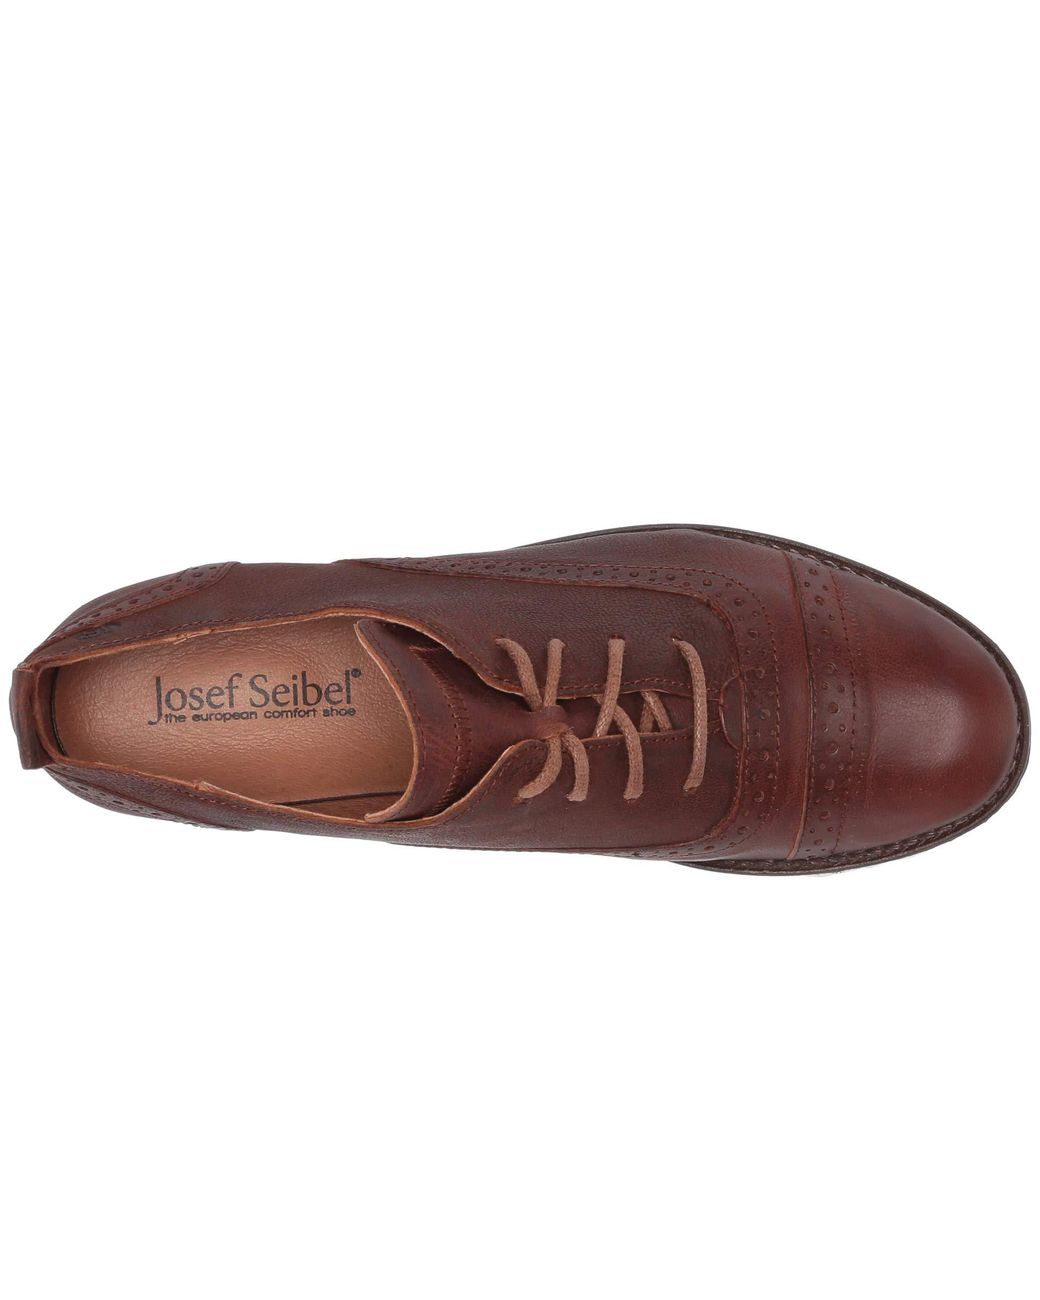 sienna premium leather deck shoes